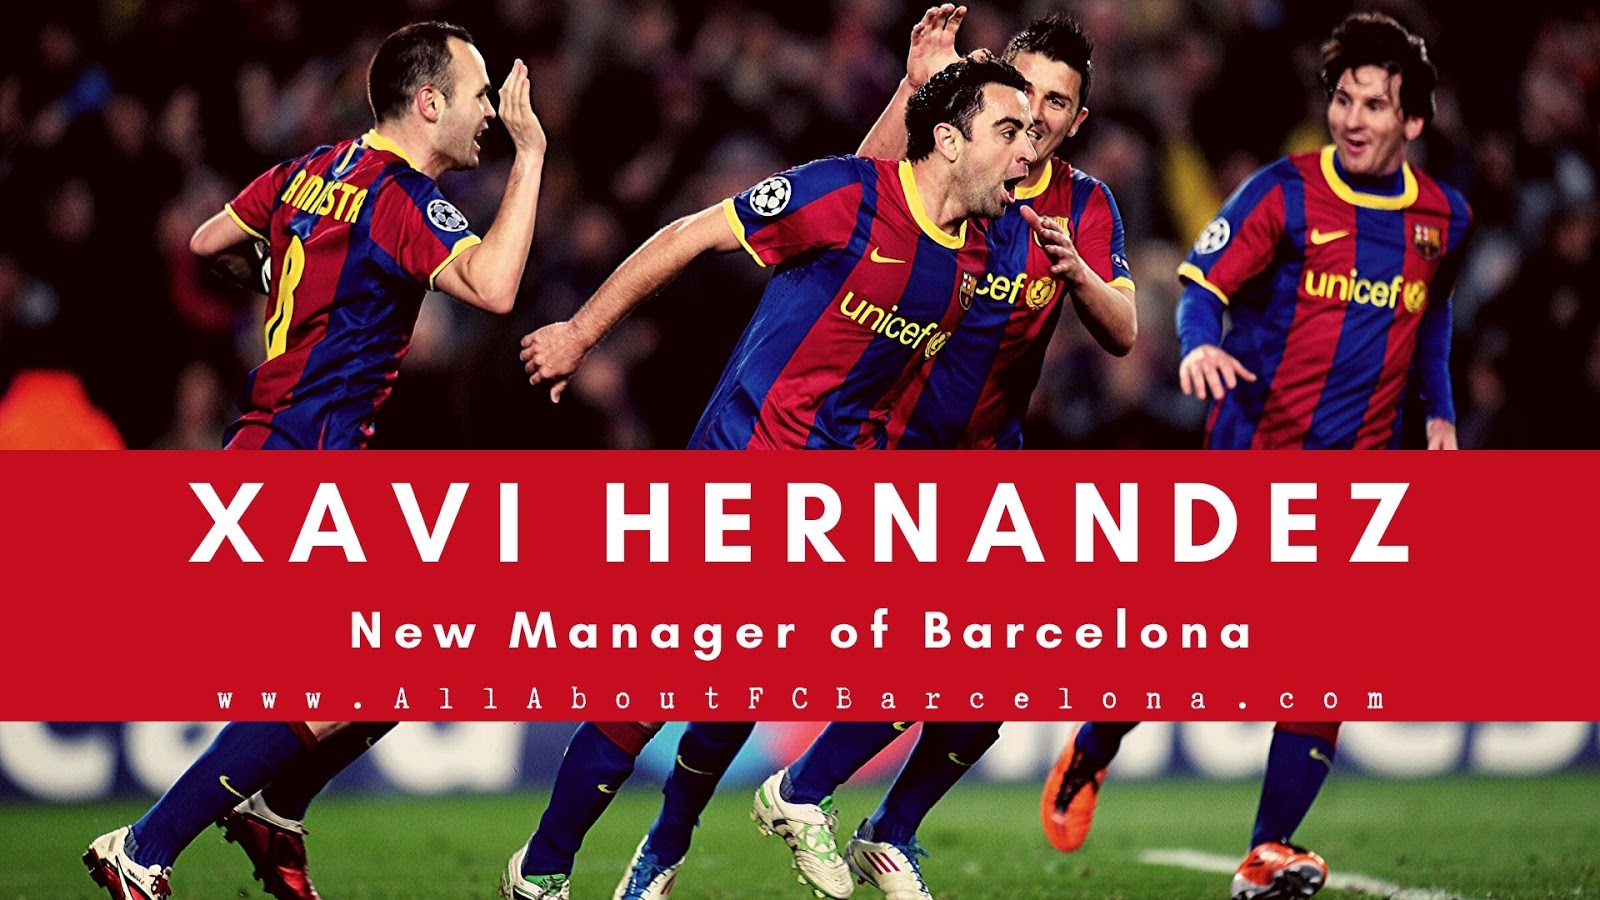 Barcelona Legend Xavi Hernandez to be announced as Coach of Barcelona on MOnday